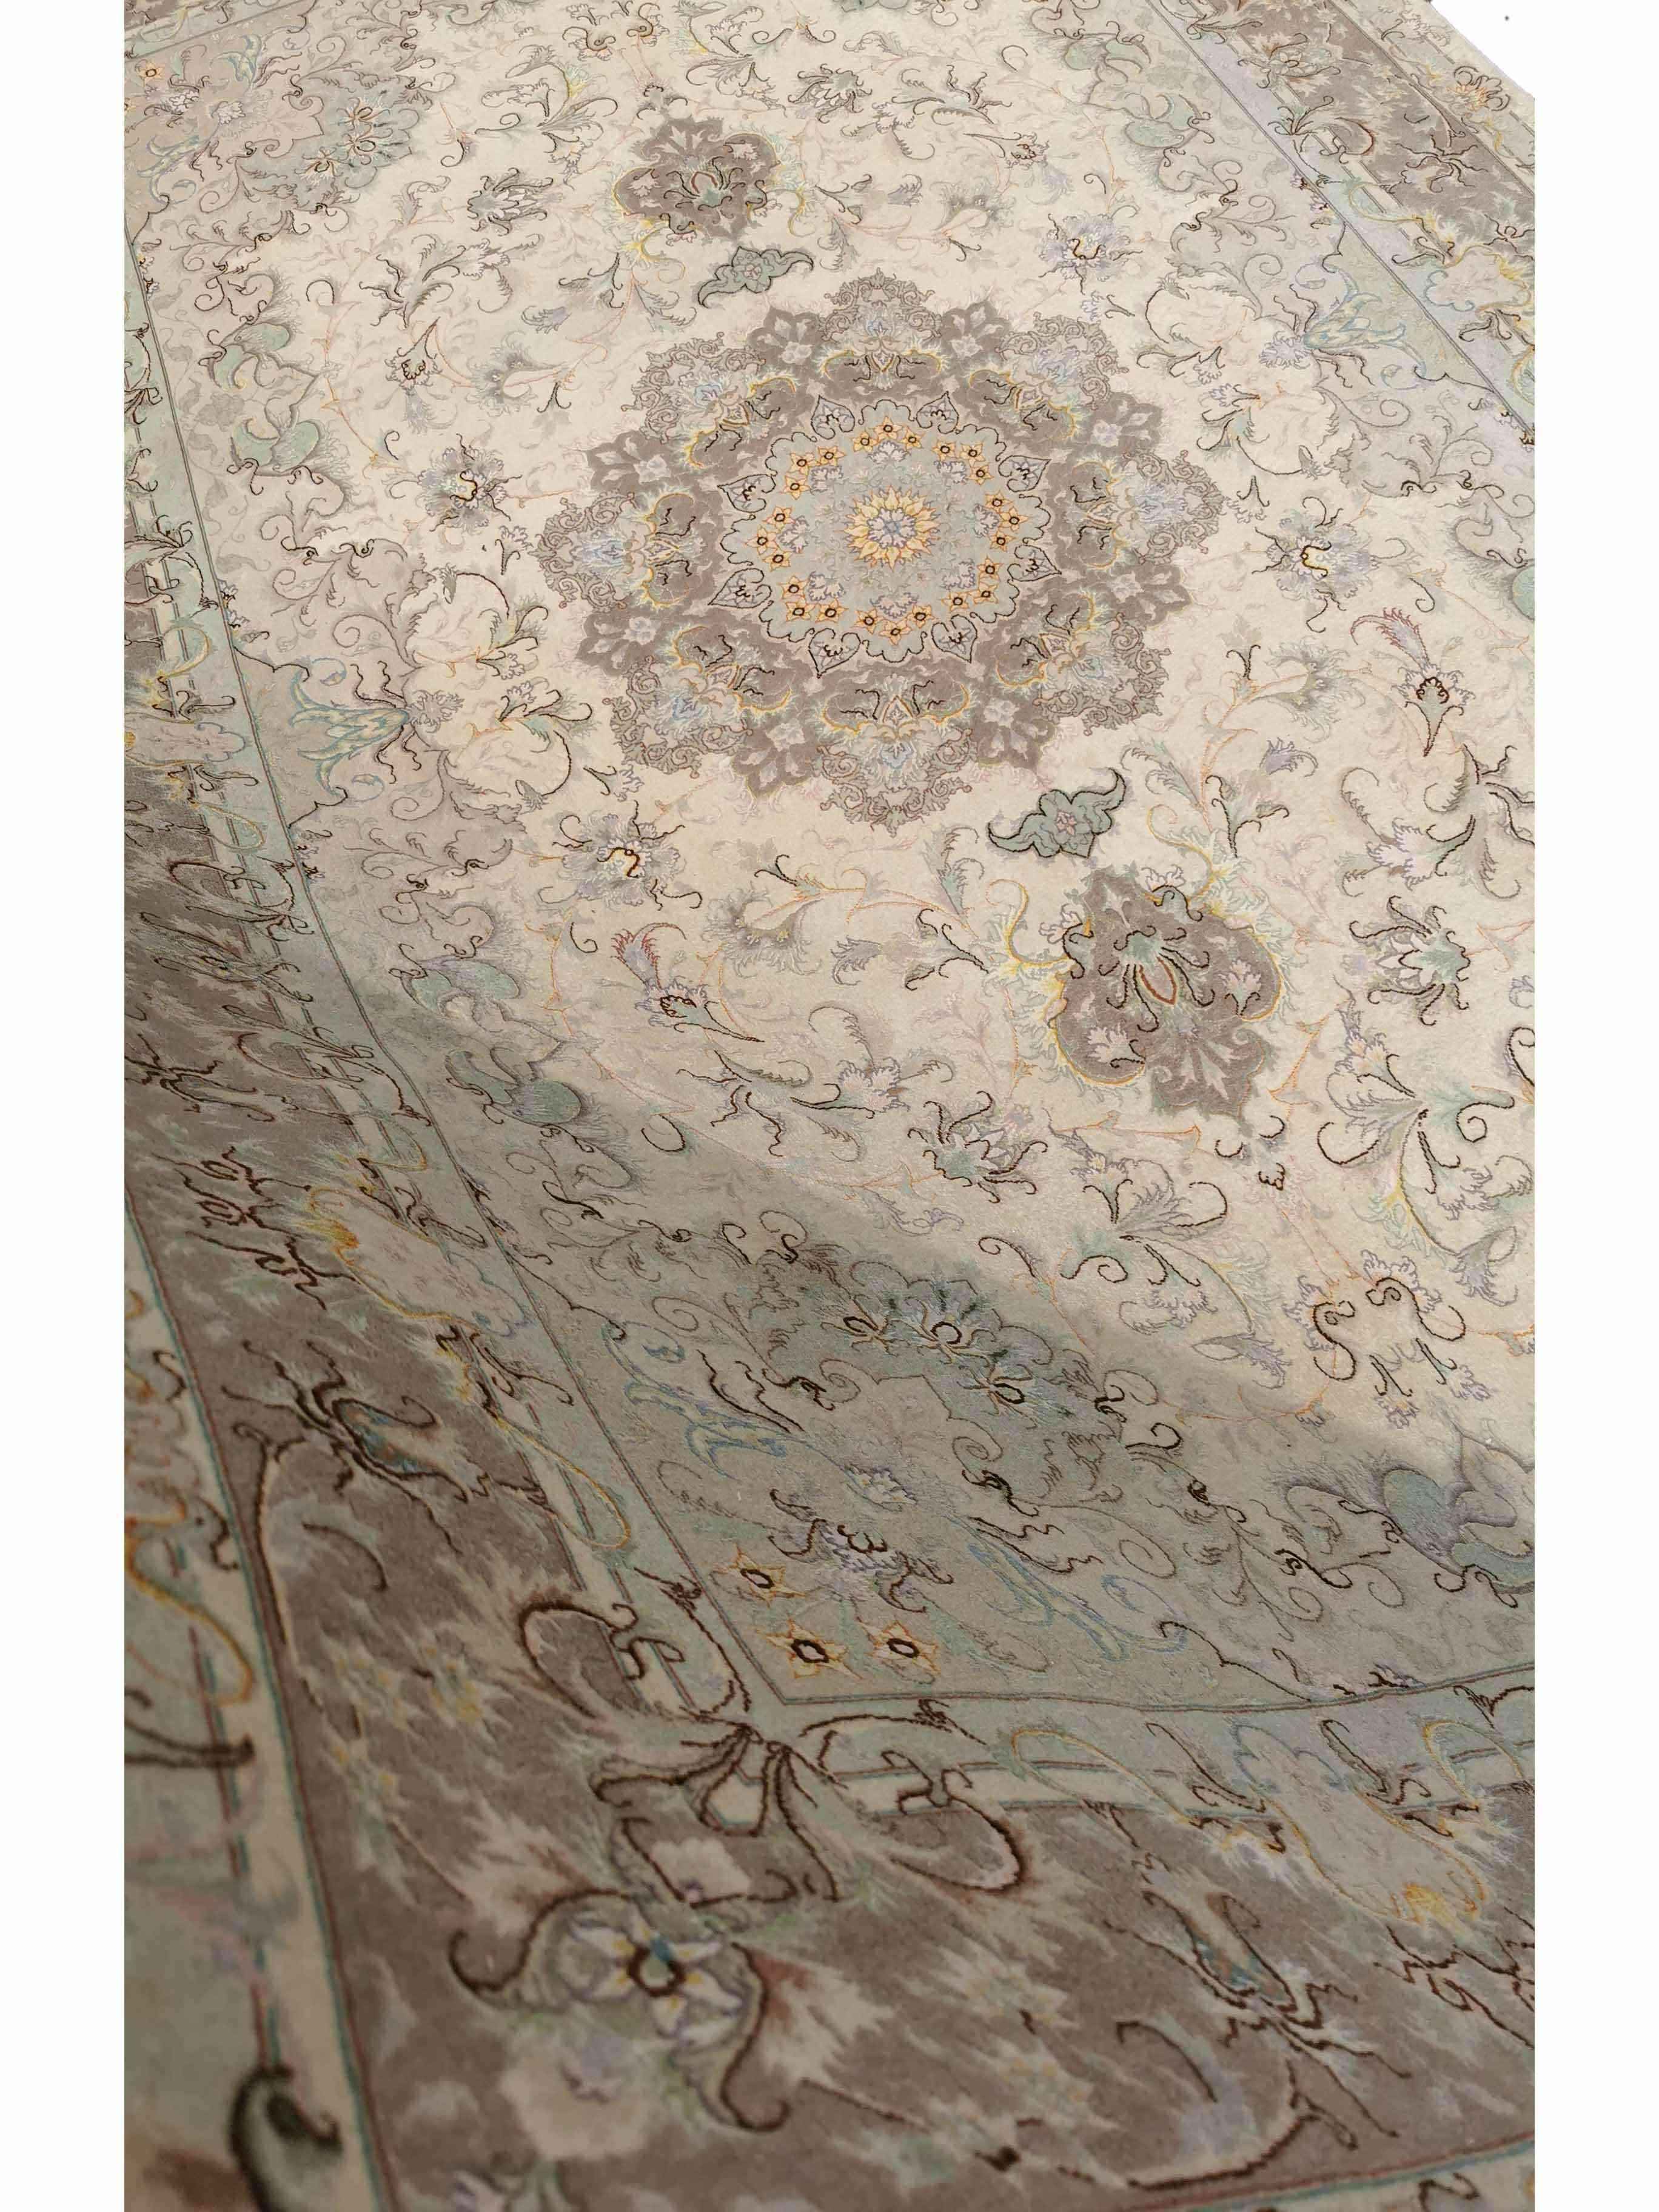 300 x 200 cm Fine Persian Tabriz Silk & wool Traditional Beige Large Rug - Rugmaster